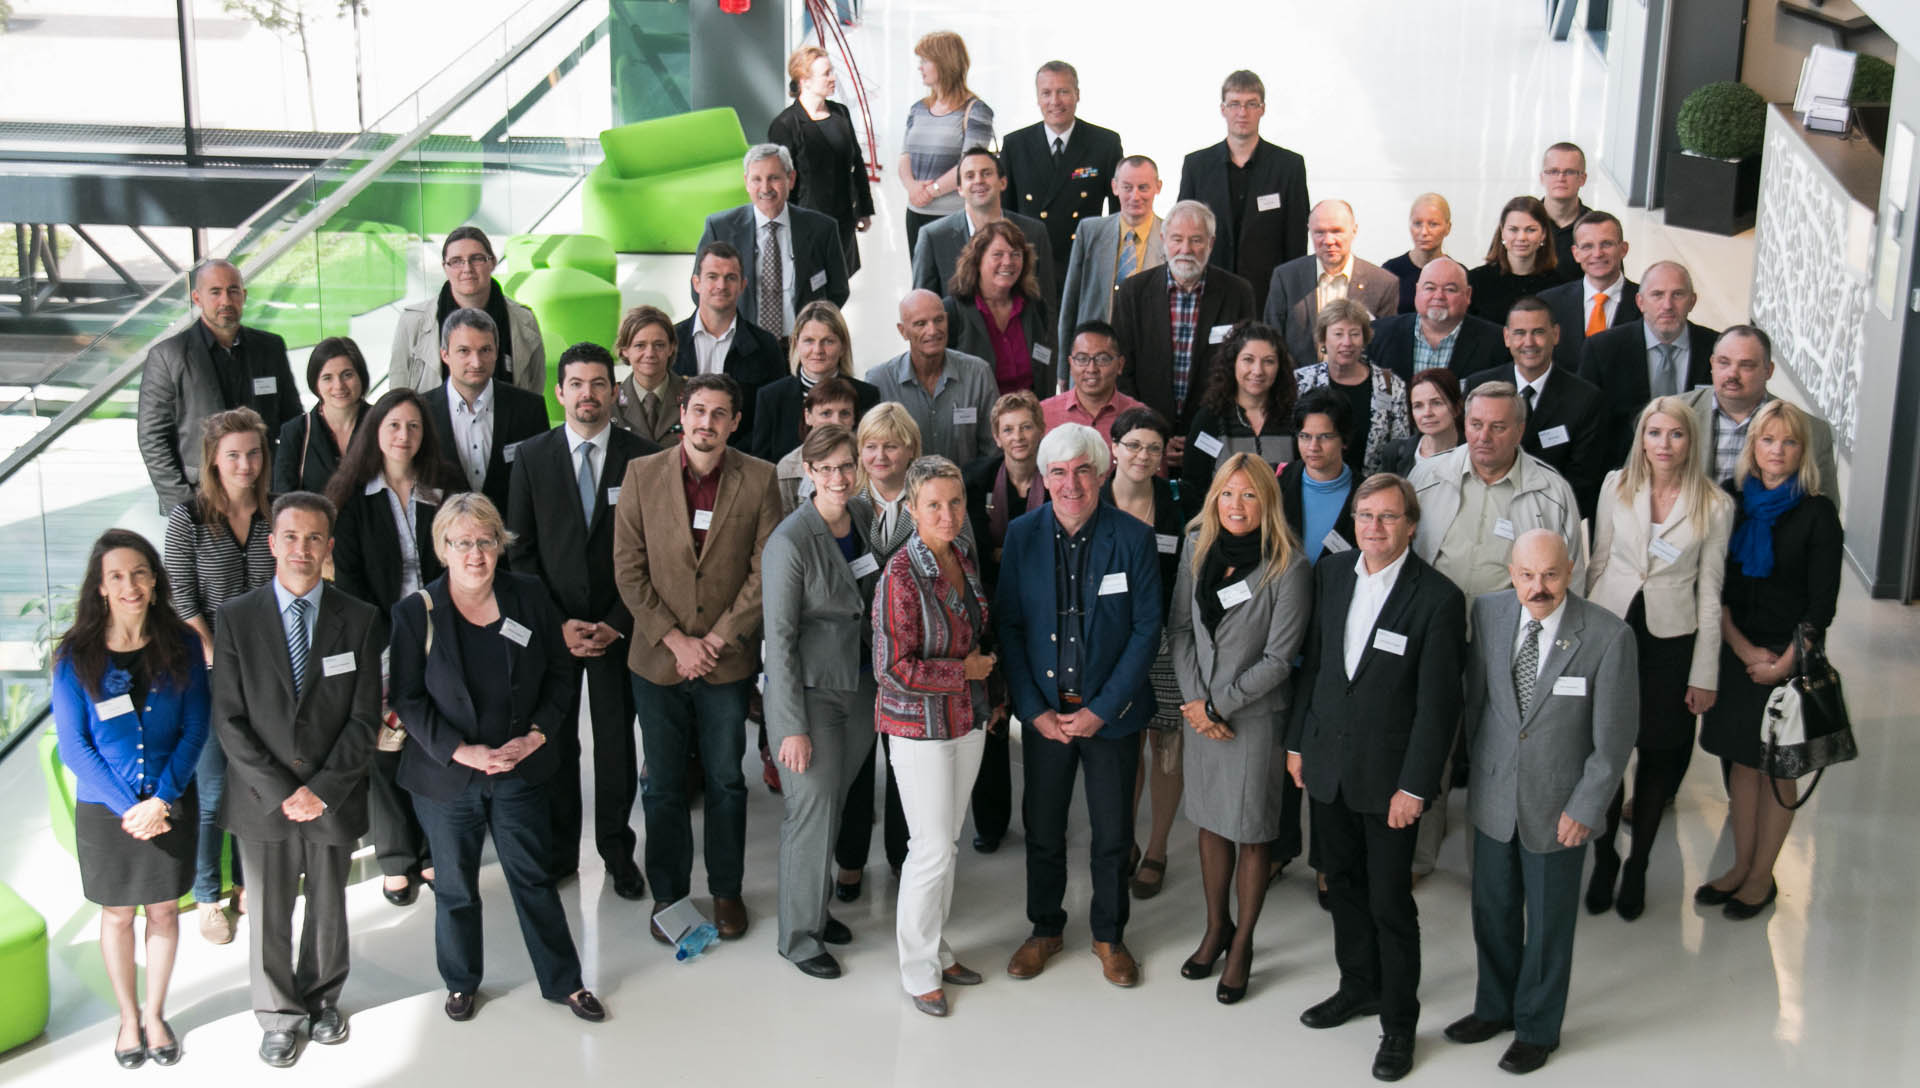 Group photo of IAMPS 2014